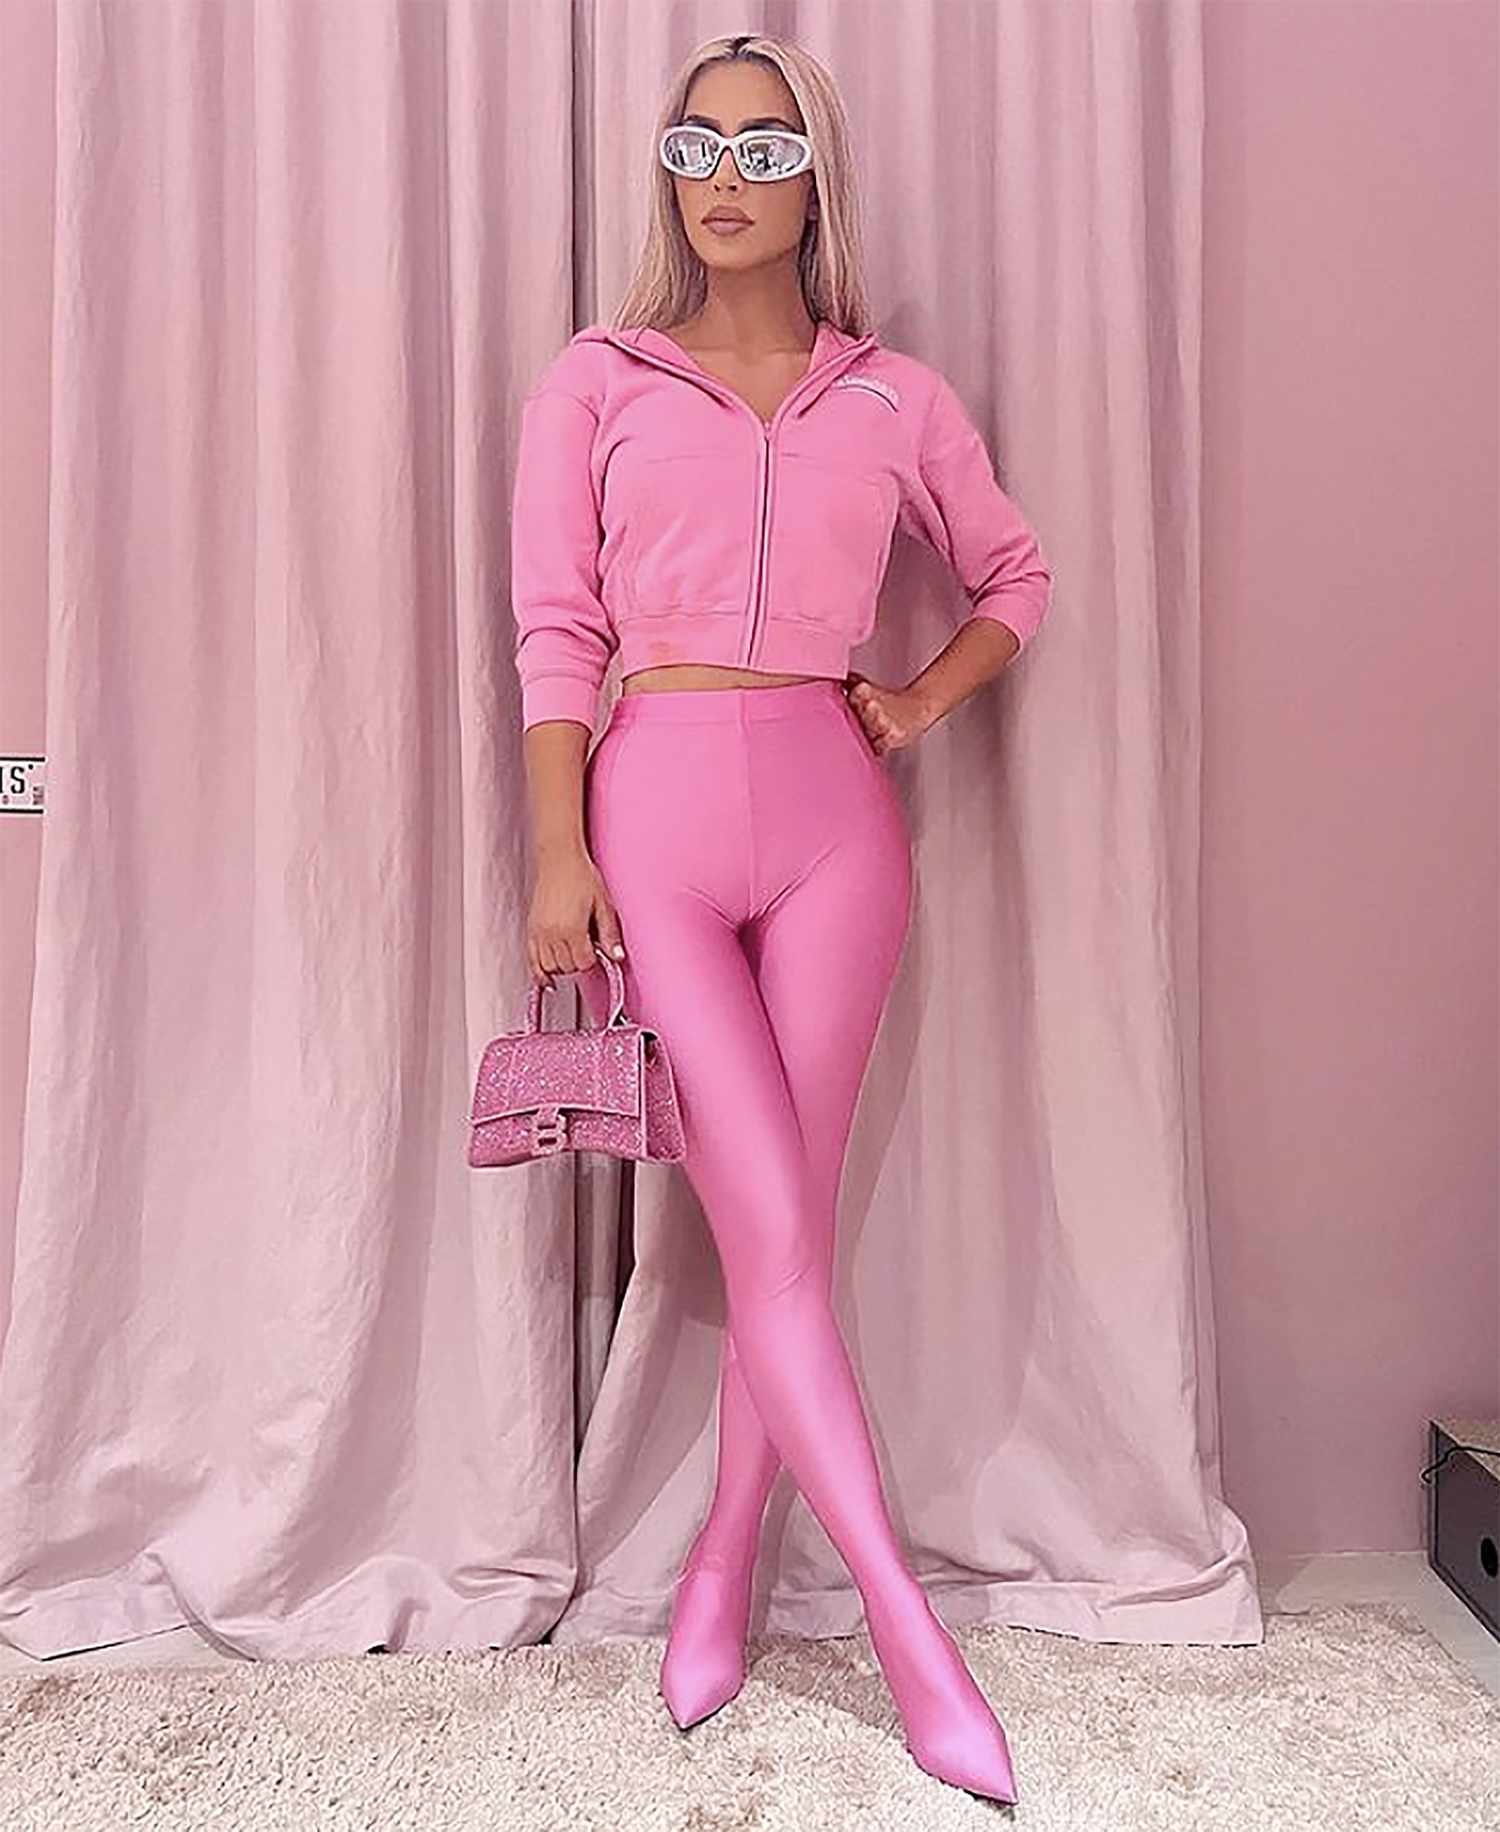 Balenciaga Barbie! Kim Kardashian Wears All-Pink in Pics by North | PEOPLE.com